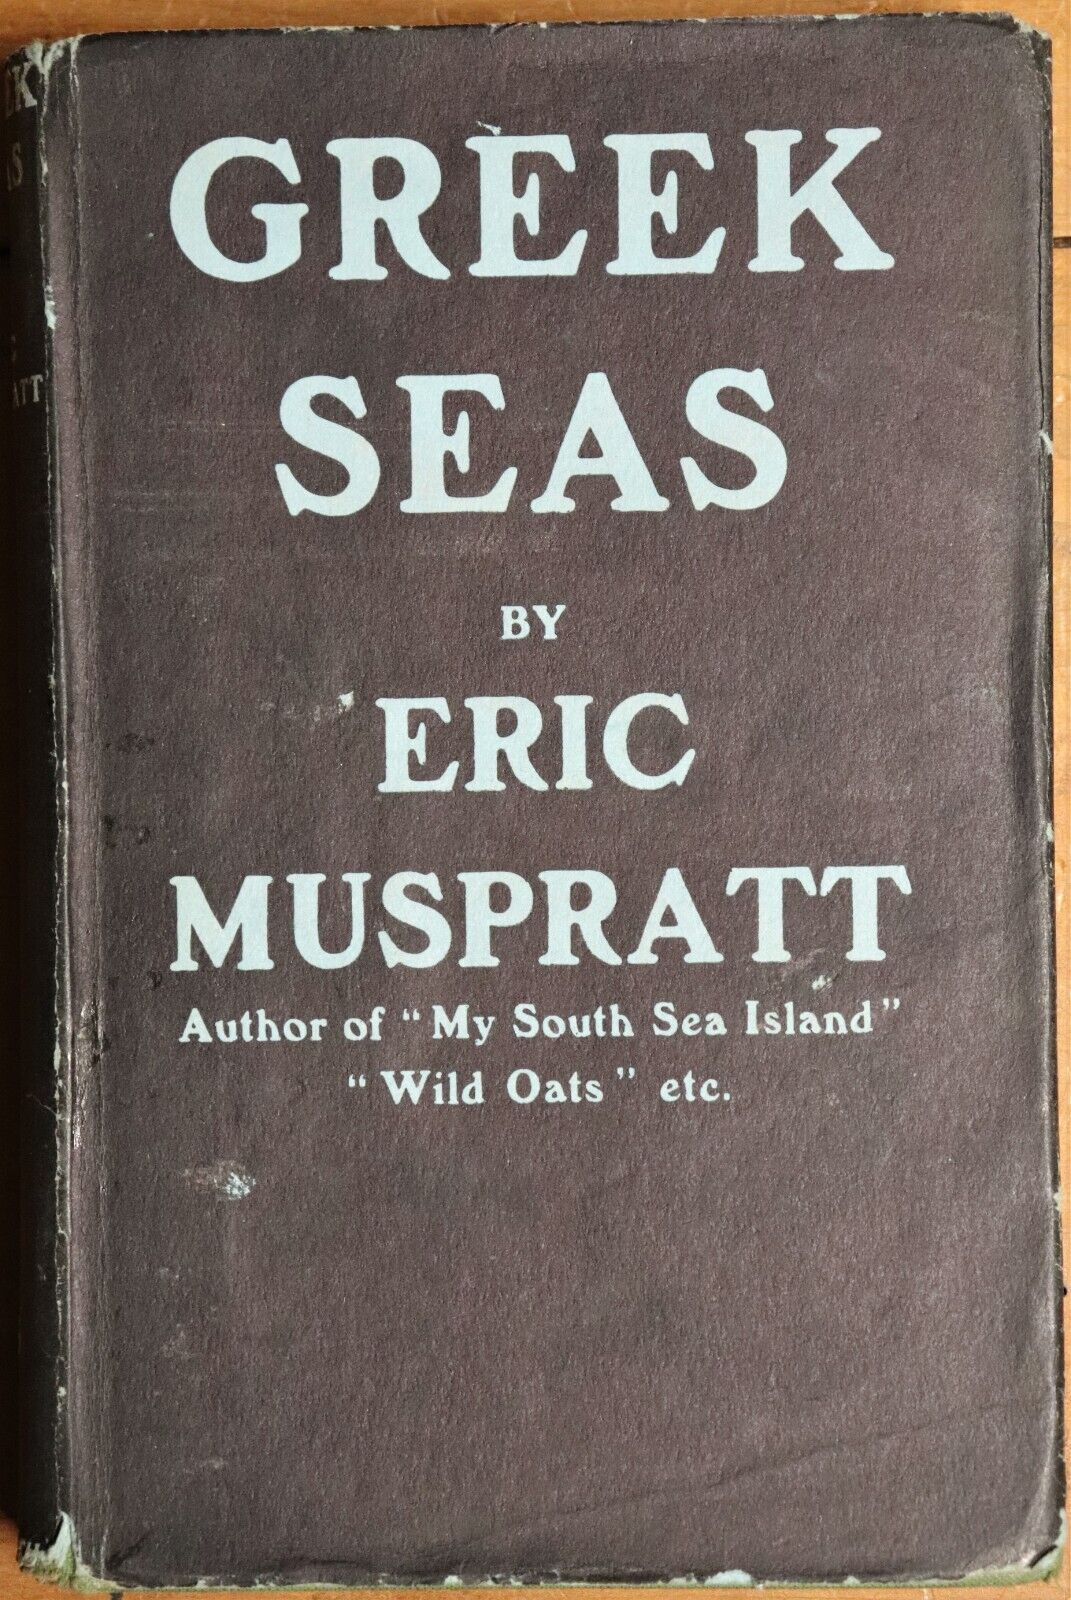 Greek Seas by Eric Muspratt - 1933 - 1st Edition Greek History Book